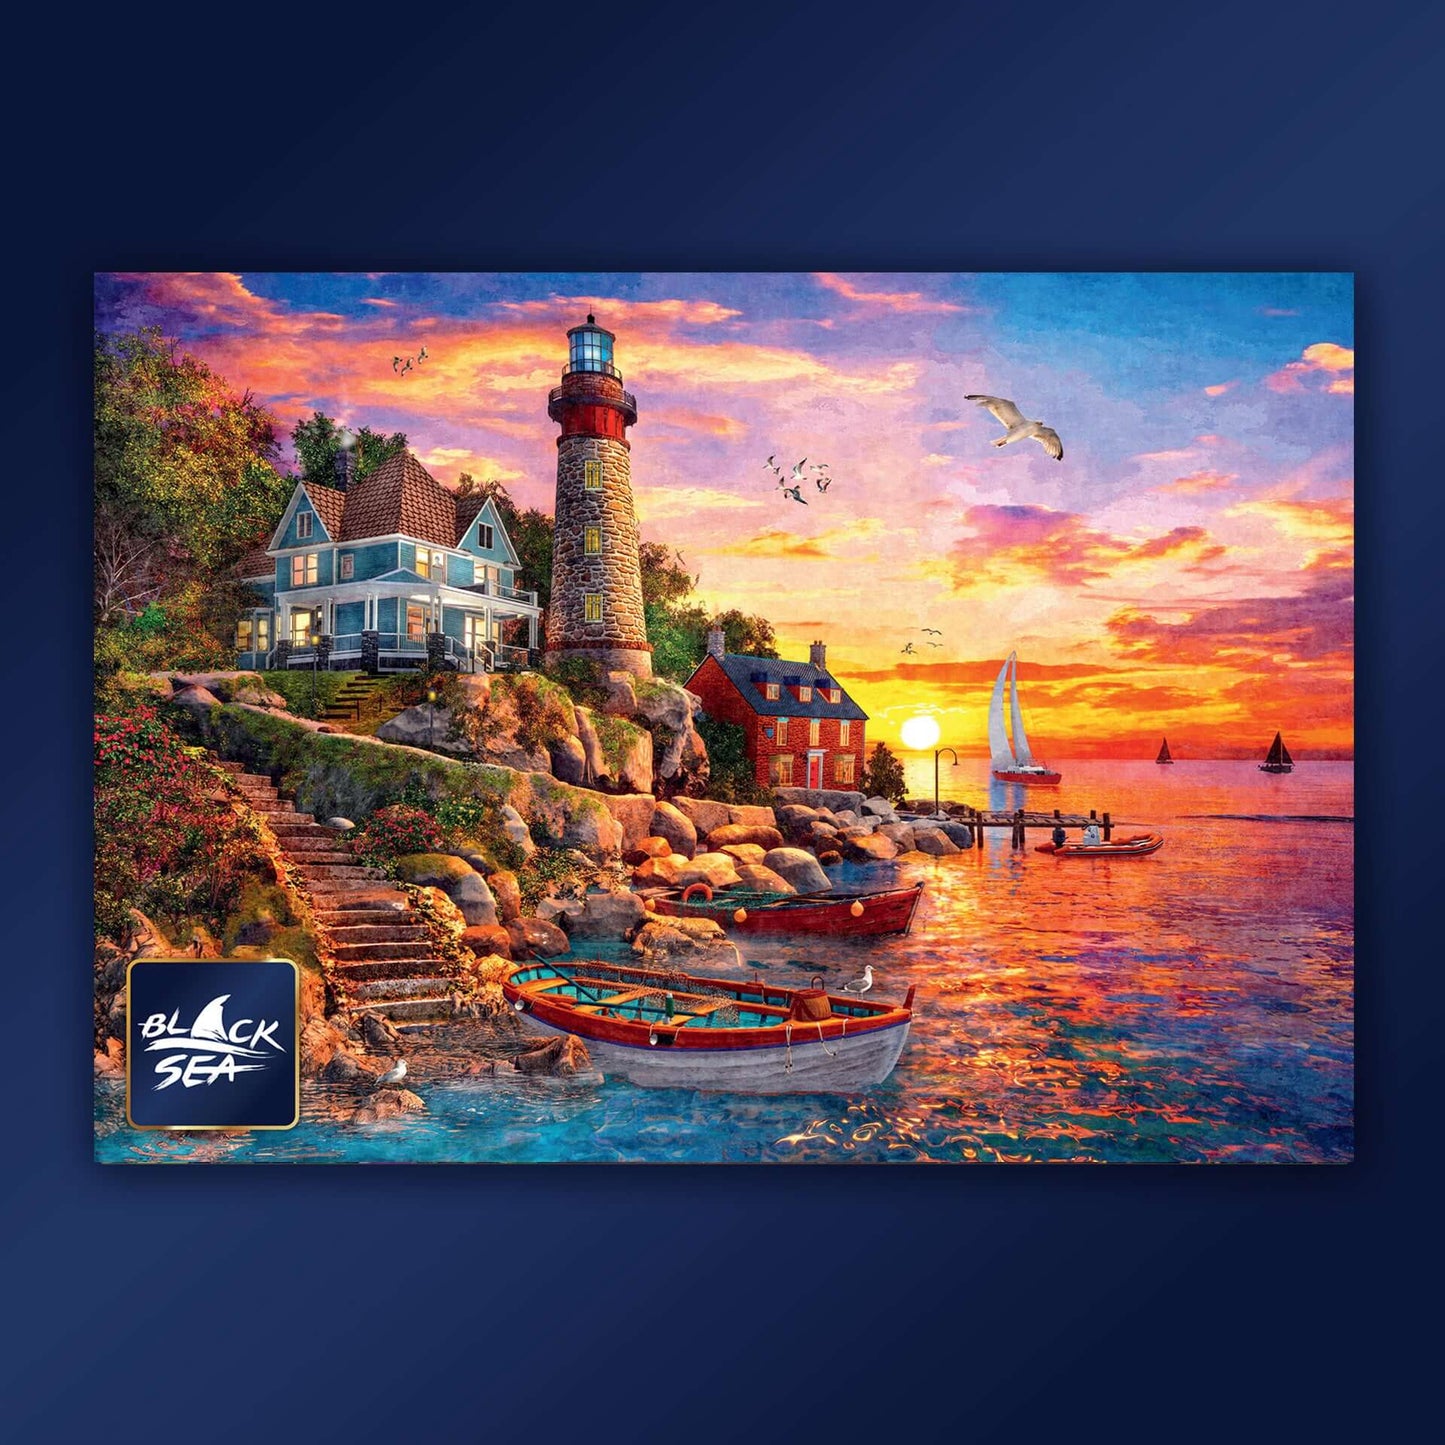 Puzzle Black Sea 1000 pieces - Lighthouse Bay, Sunset, --